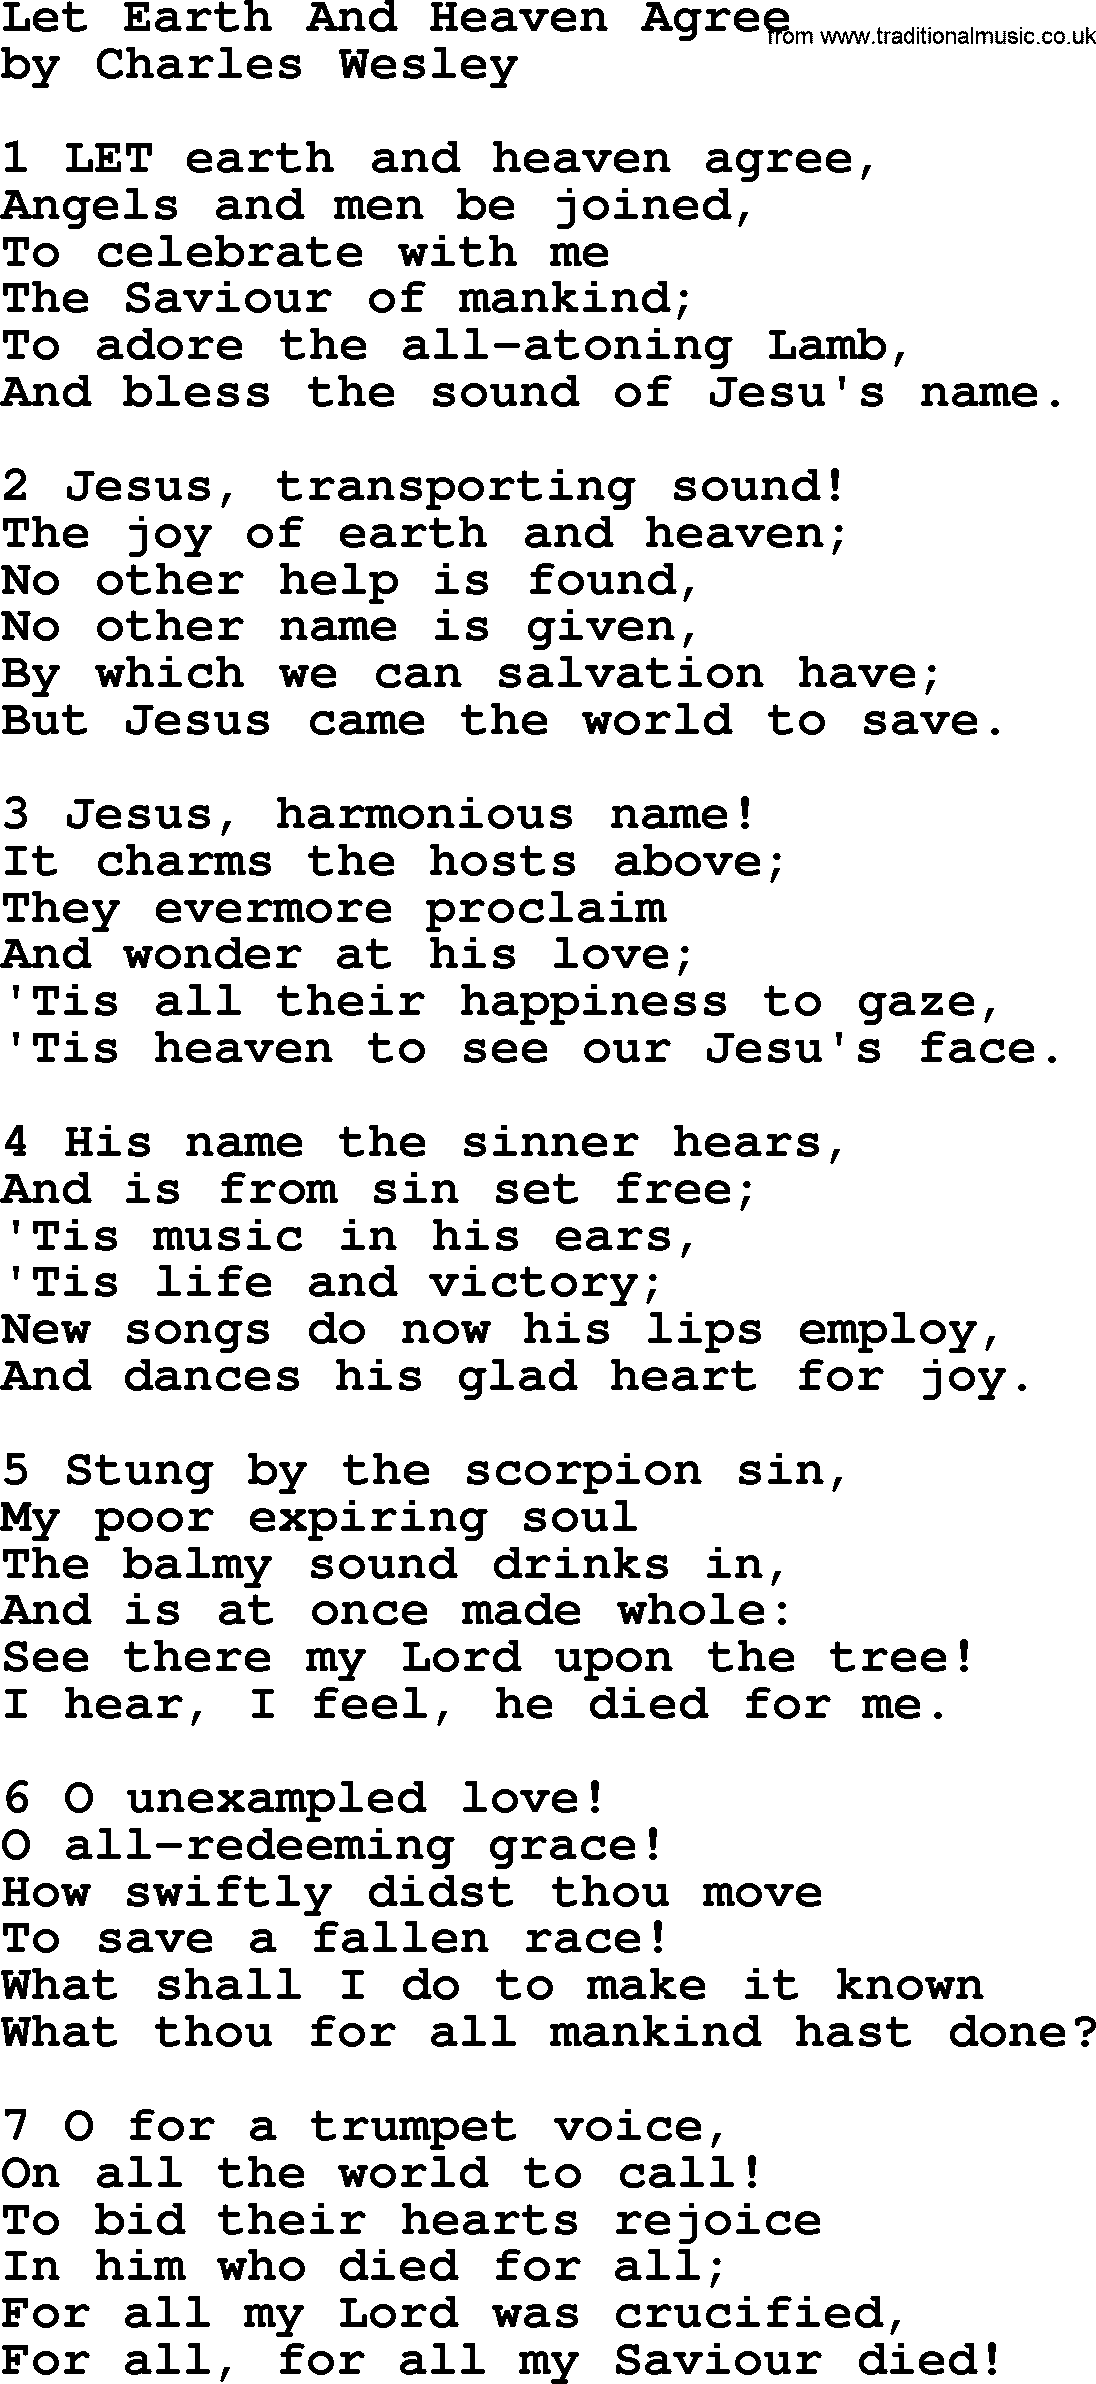 Charles Wesley hymn: Let Earth And Heaven Agree, lyrics